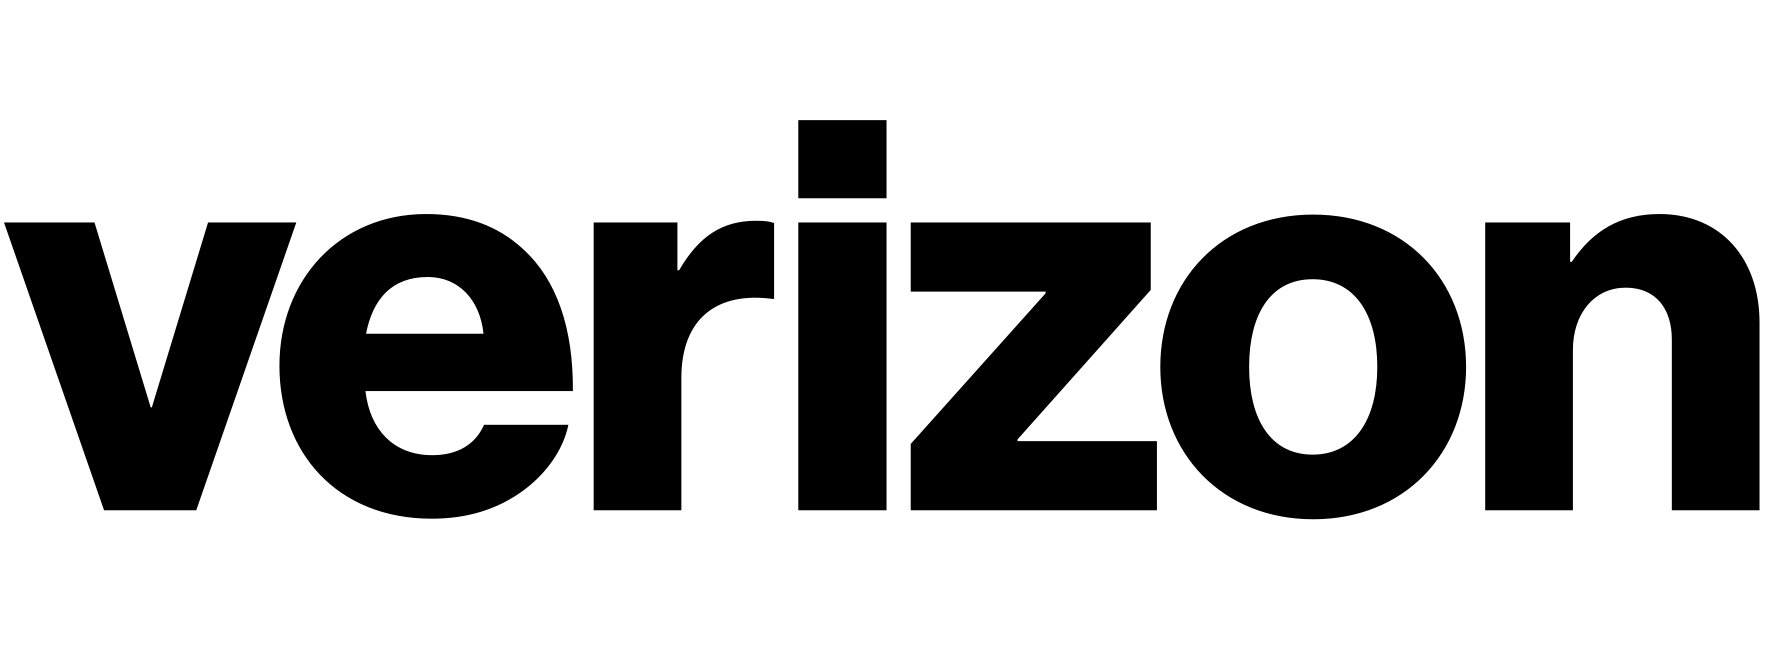 verizon communications logo